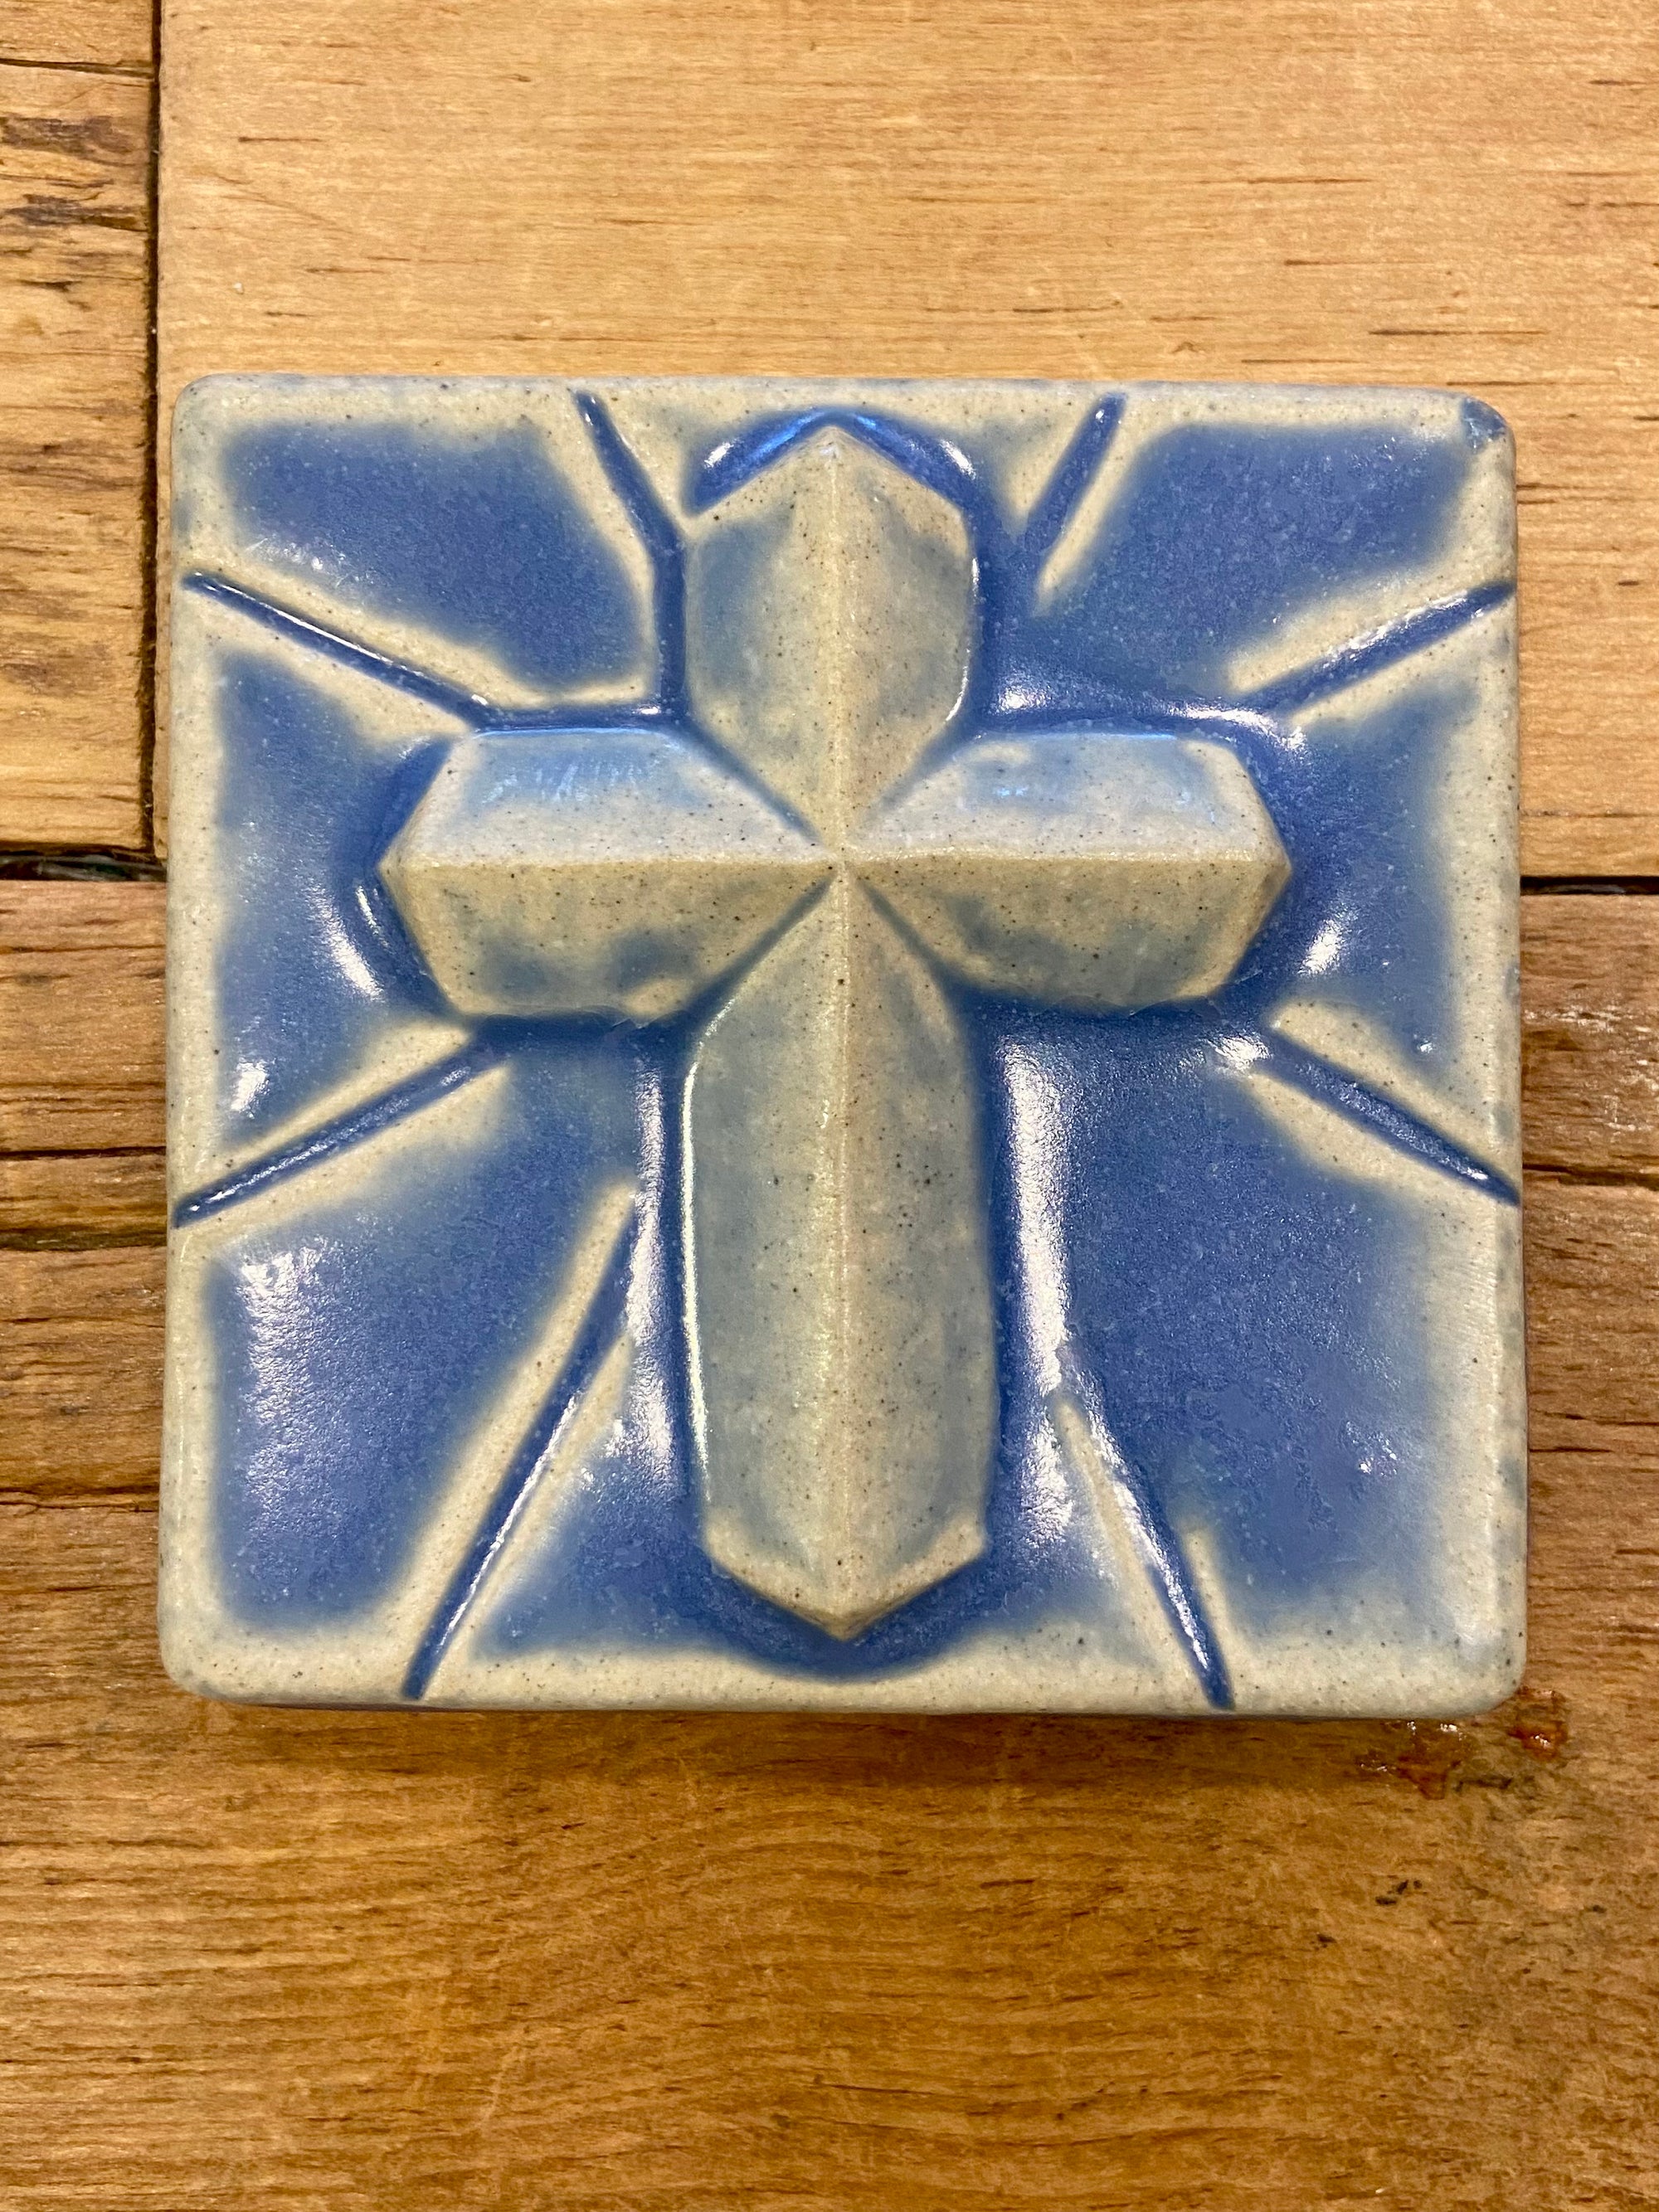 4x4 Mario's Cross Pewabic Tile - Periwinkle Pewabic Pottery   